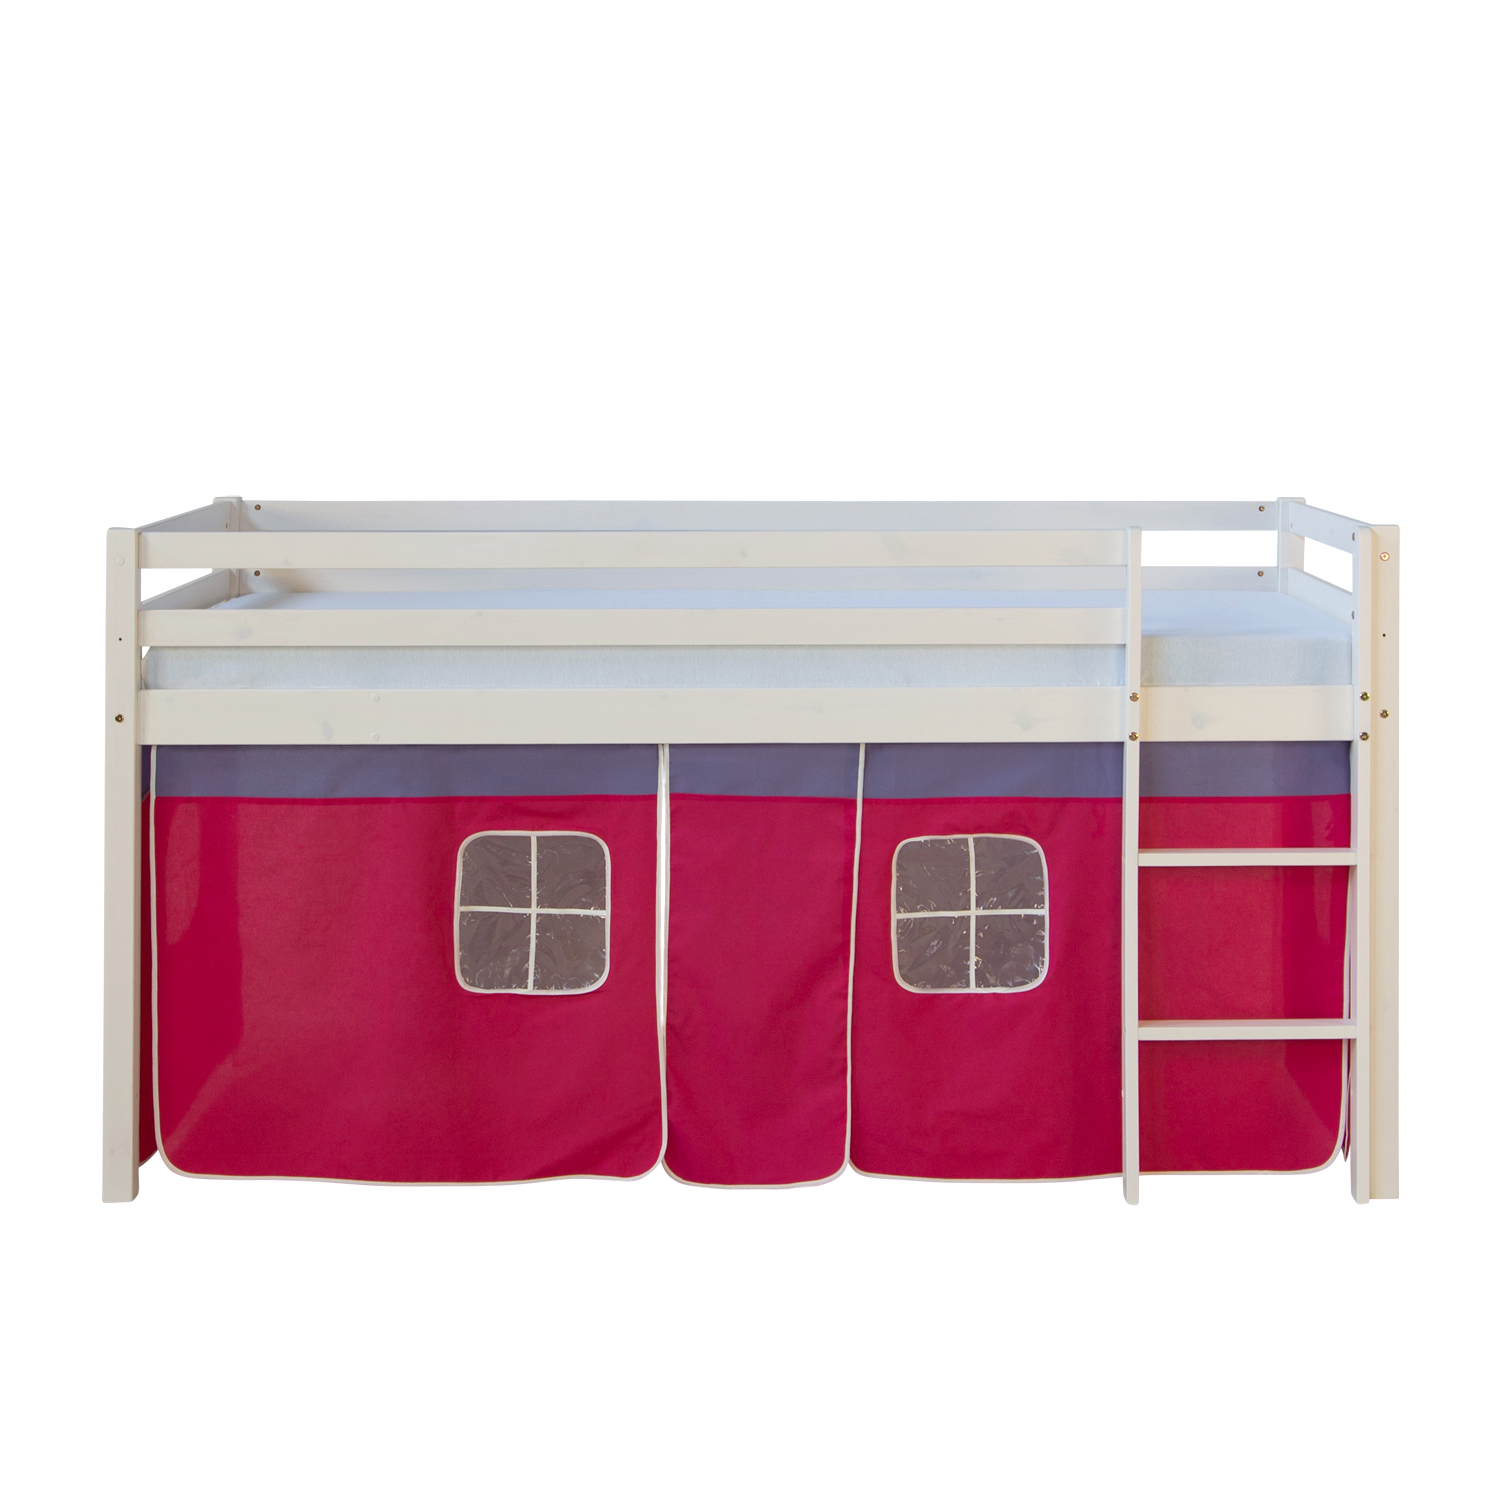 Children bunk bed loft cabin bed solid pine white pink curtain